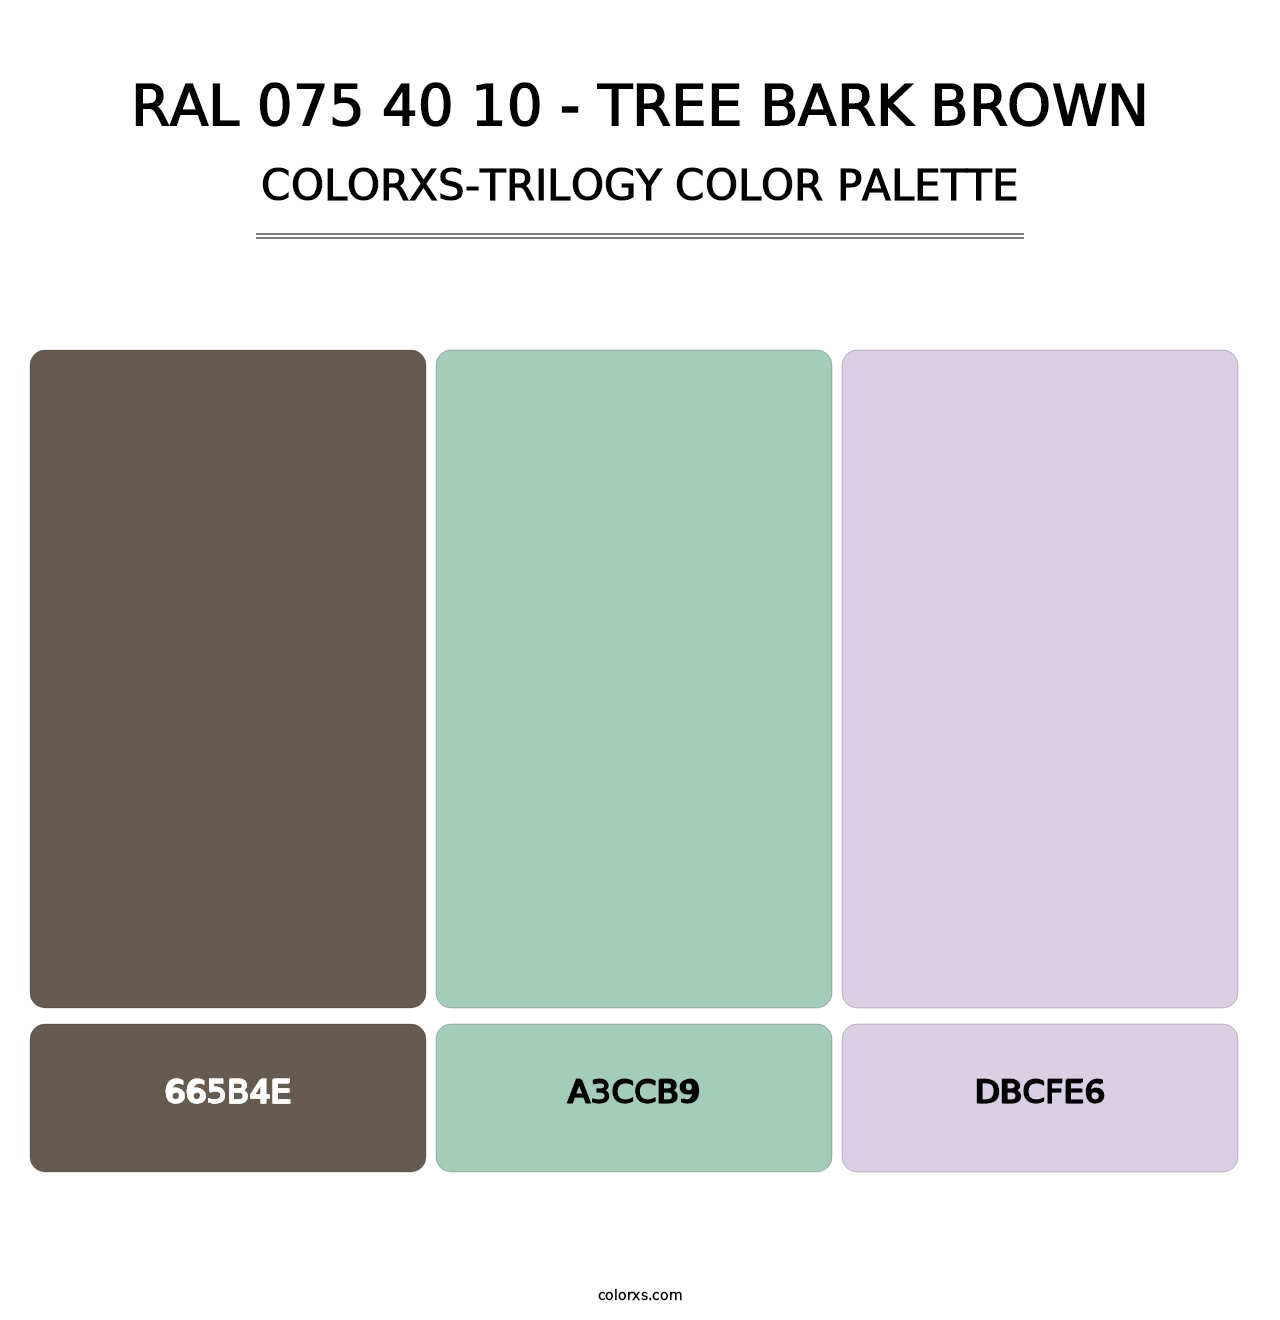 RAL 075 40 10 - Tree Bark Brown - Colorxs Trilogy Palette